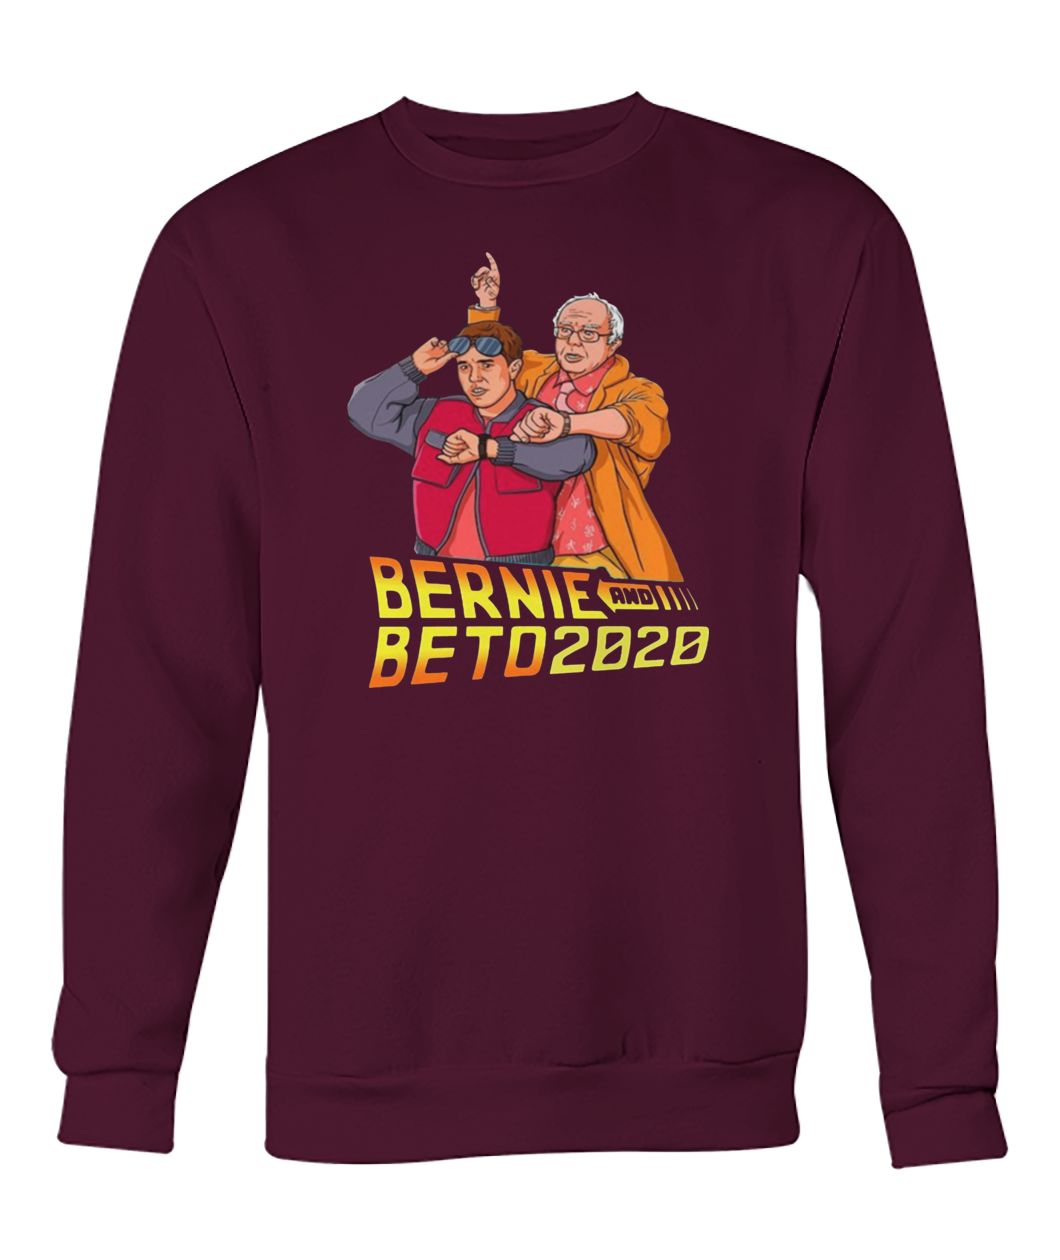 Beto bernie for president 2020 crew neck sweatshirt